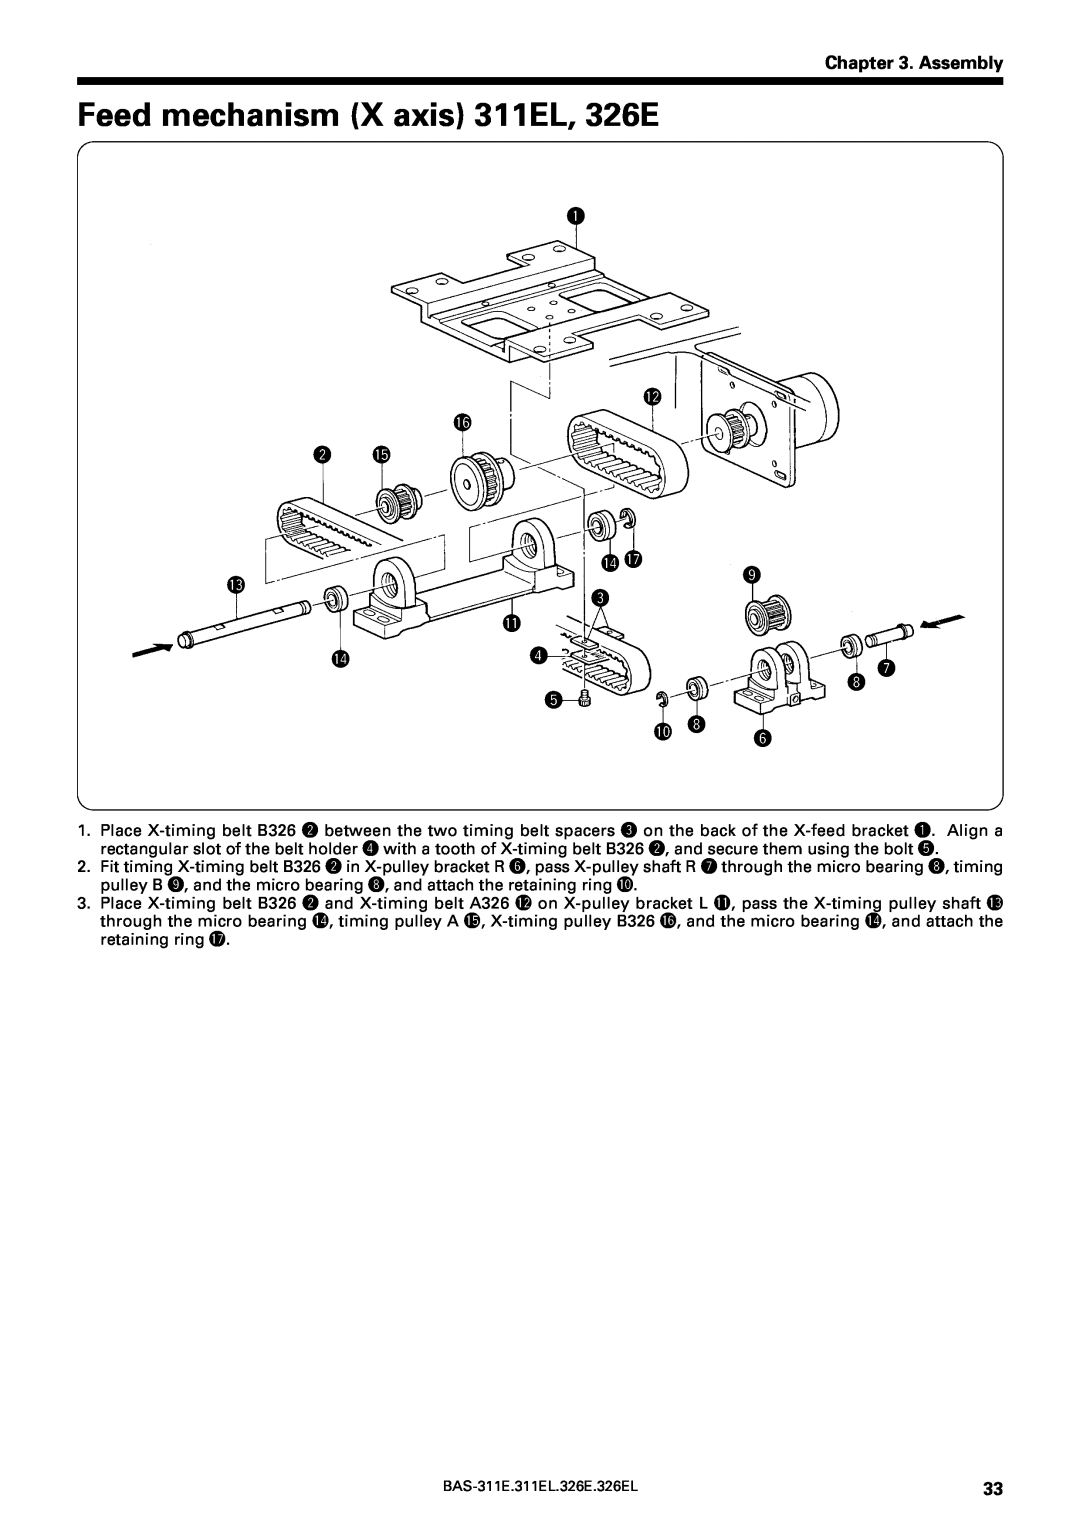 Brother BAS-311E service manual Feed mechanism X axis 311EL, 326E, Assembly, w !5, i u, t 0i y 